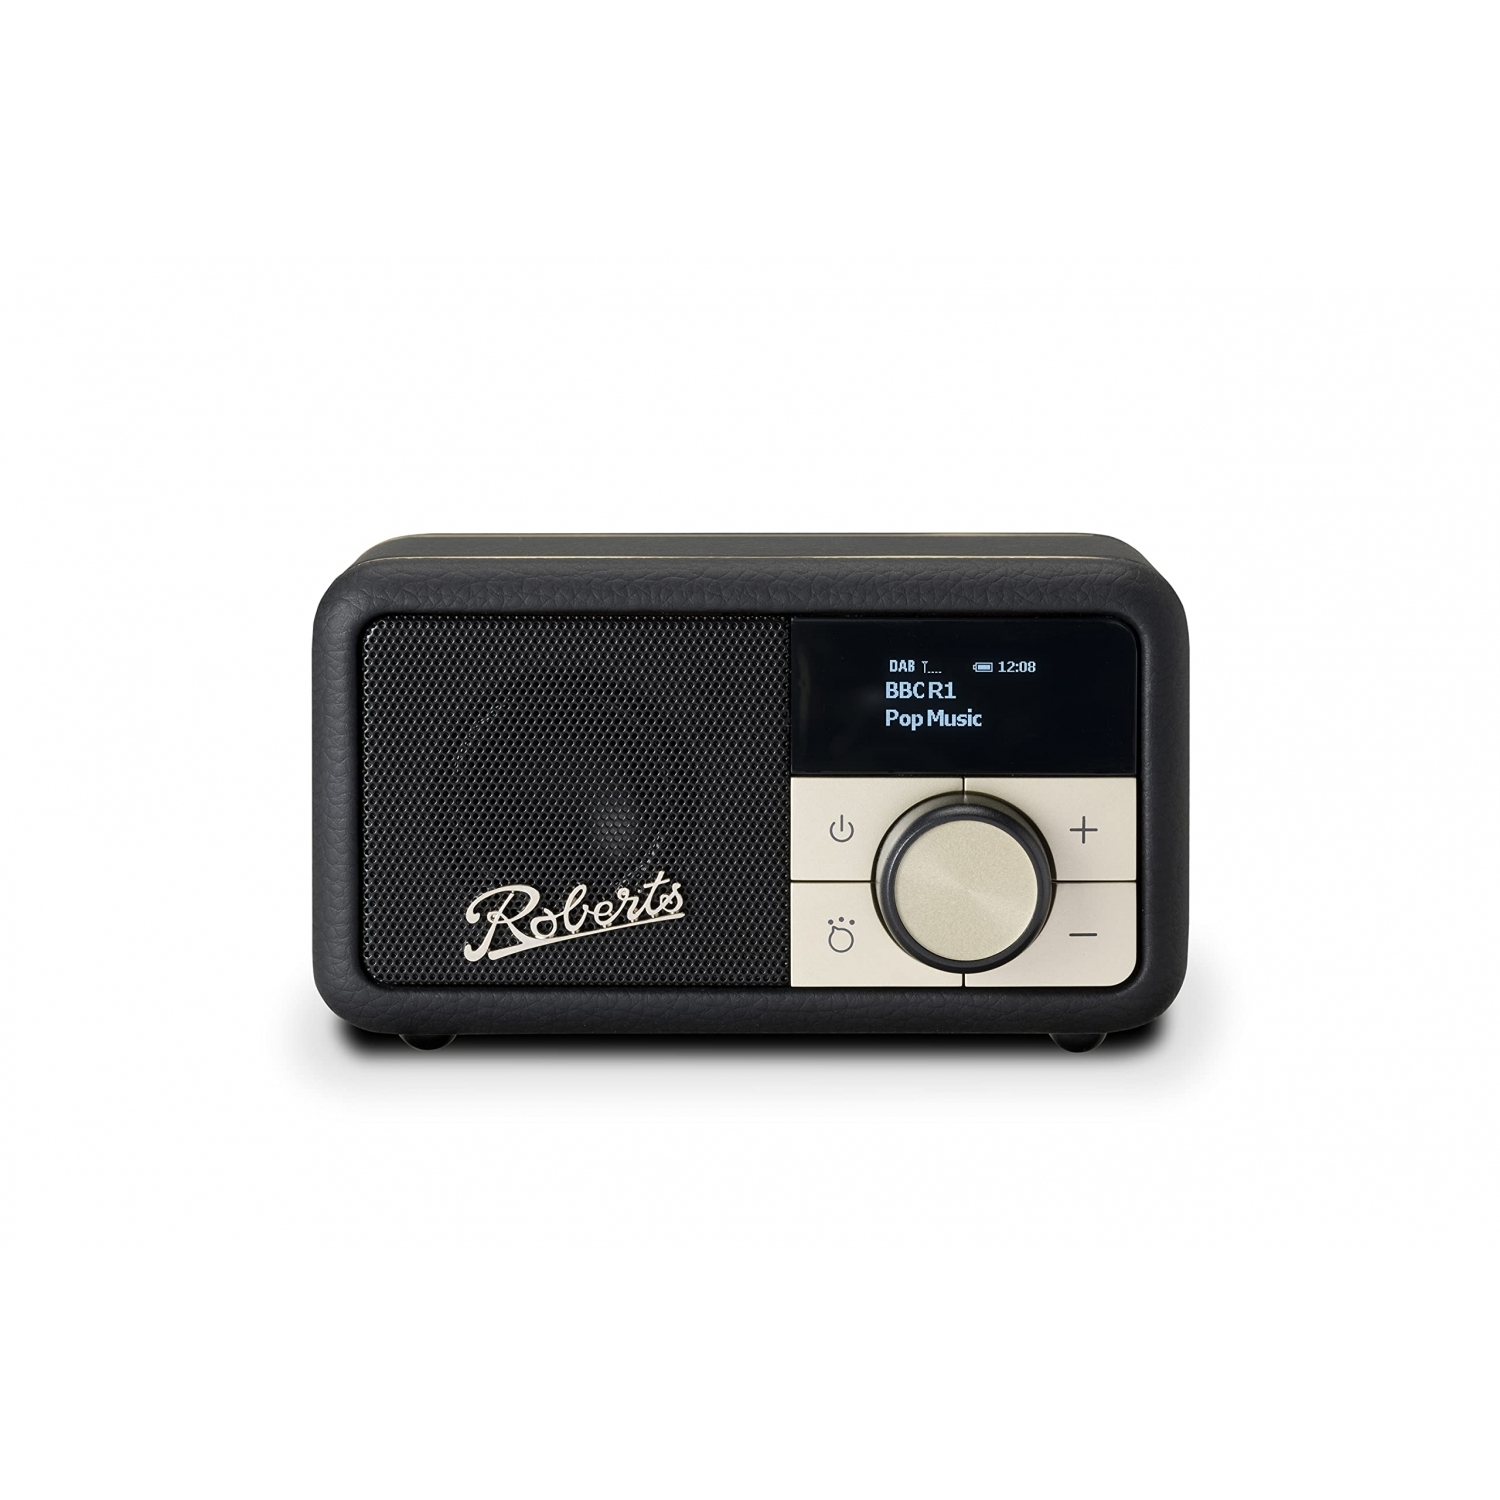 Roberts Revival RD70 DAB/DAB+/FM Bluetooth Digital Radio with